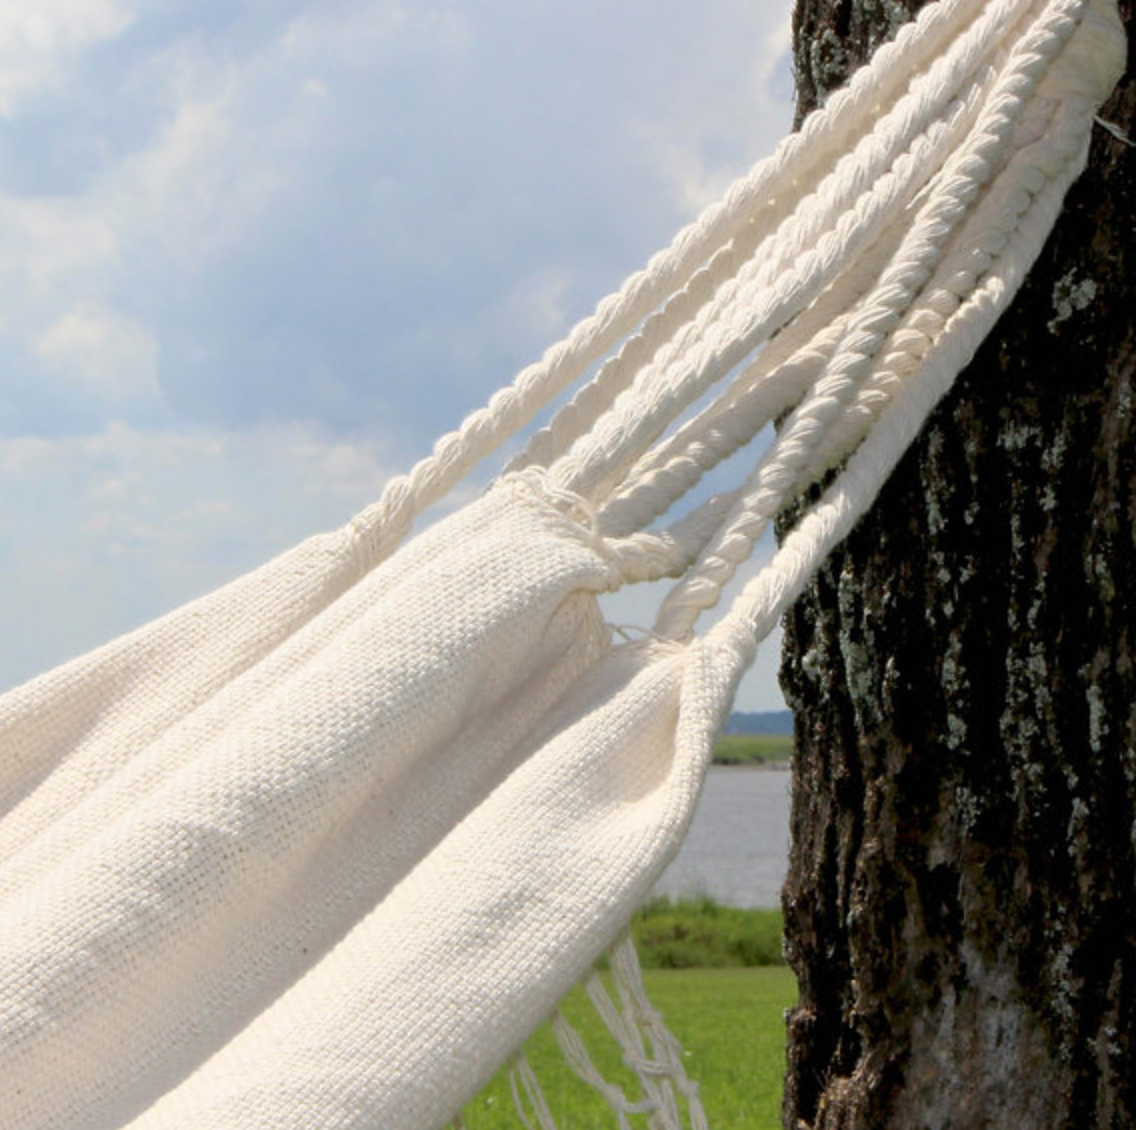 Hand-loomed cotton hammocks from Paraguay